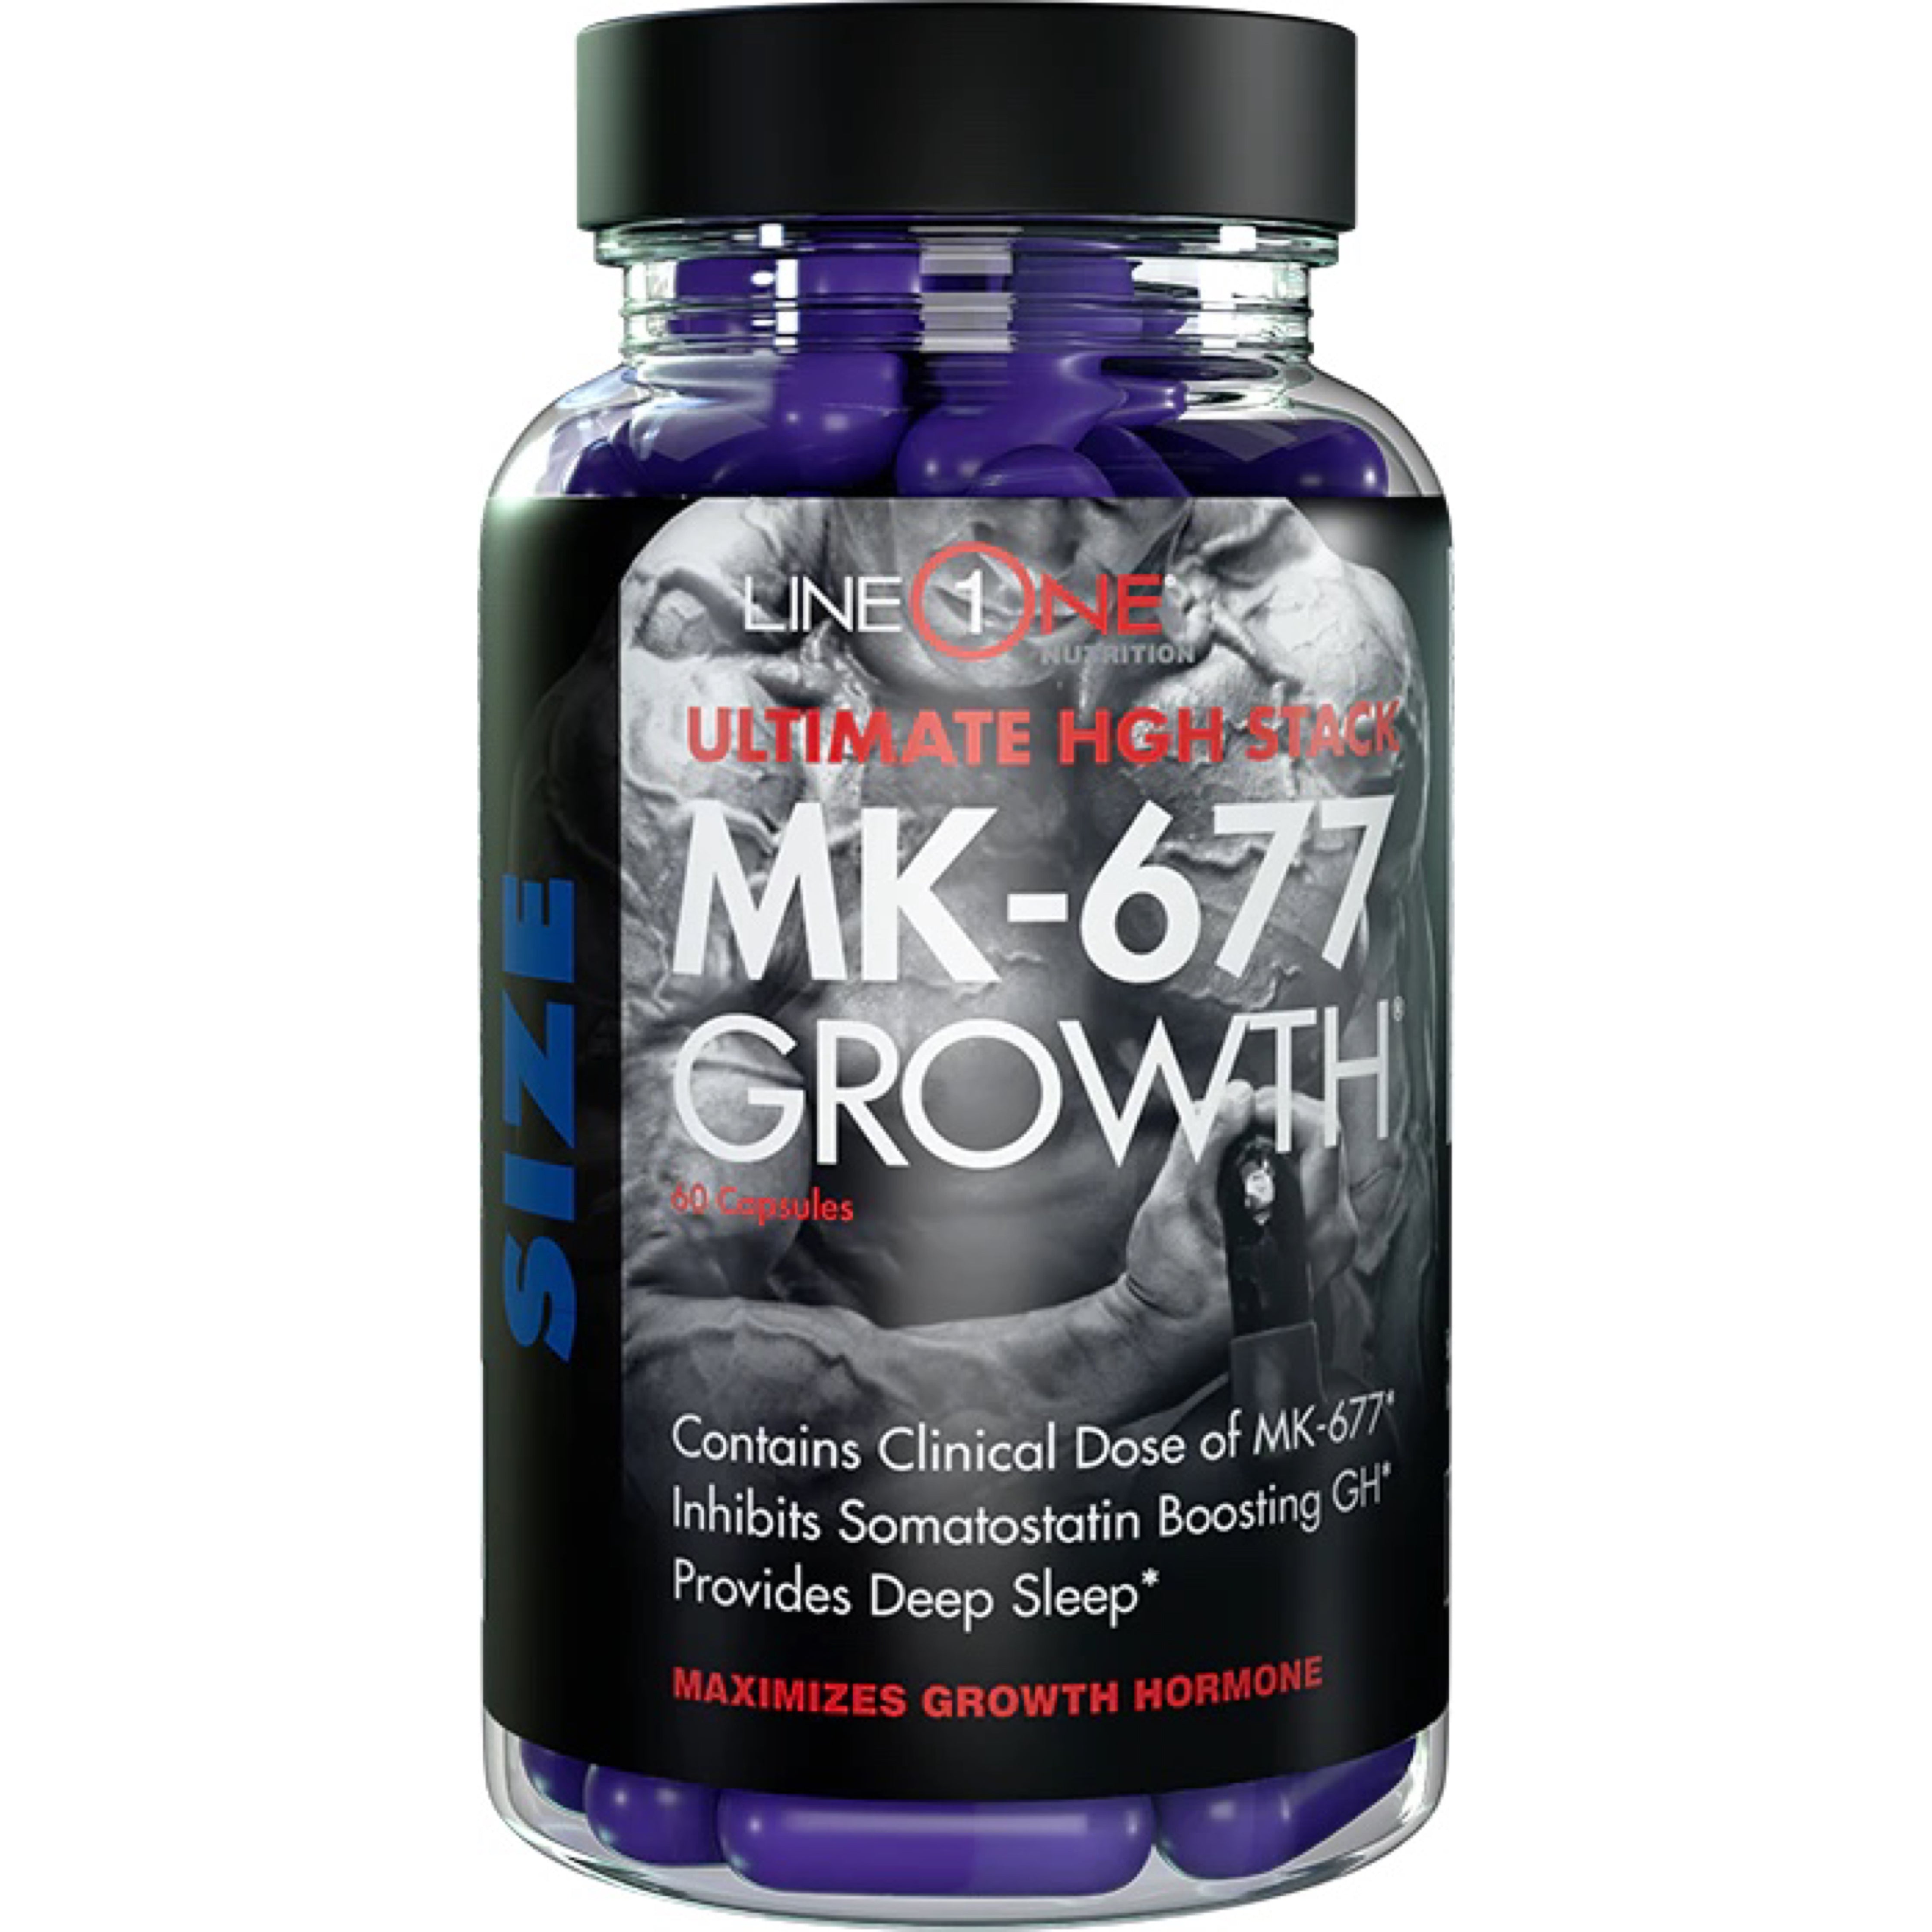 mk-677-growth-gyfitness-training-wellness-center